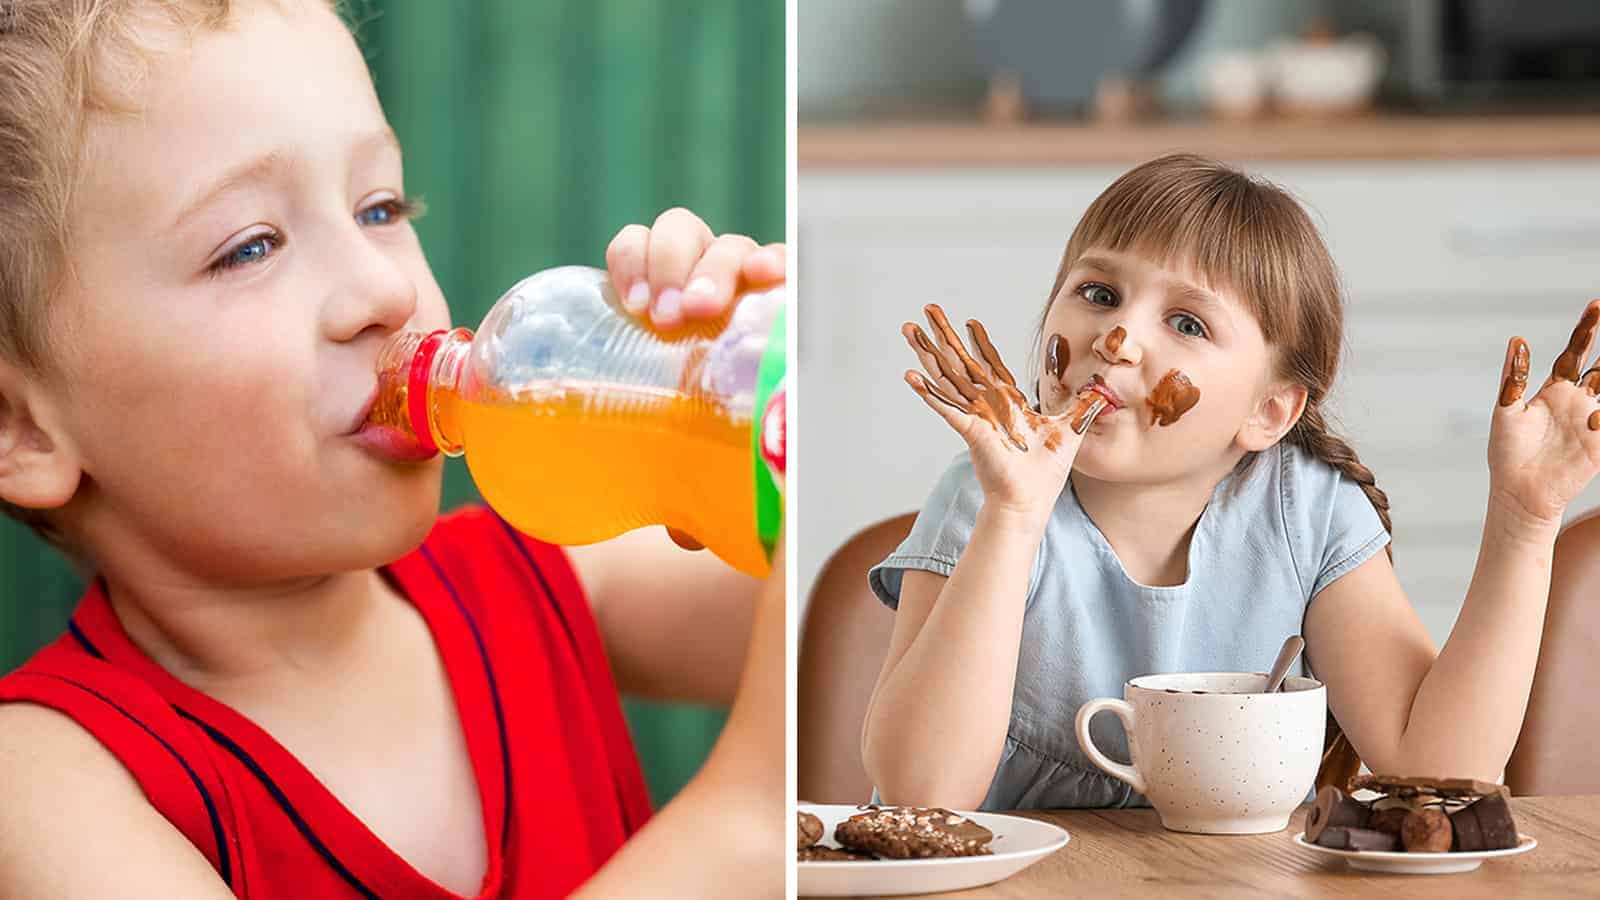 Studies Reveal: Sugar Overload in Kids Causes Major Health Problems